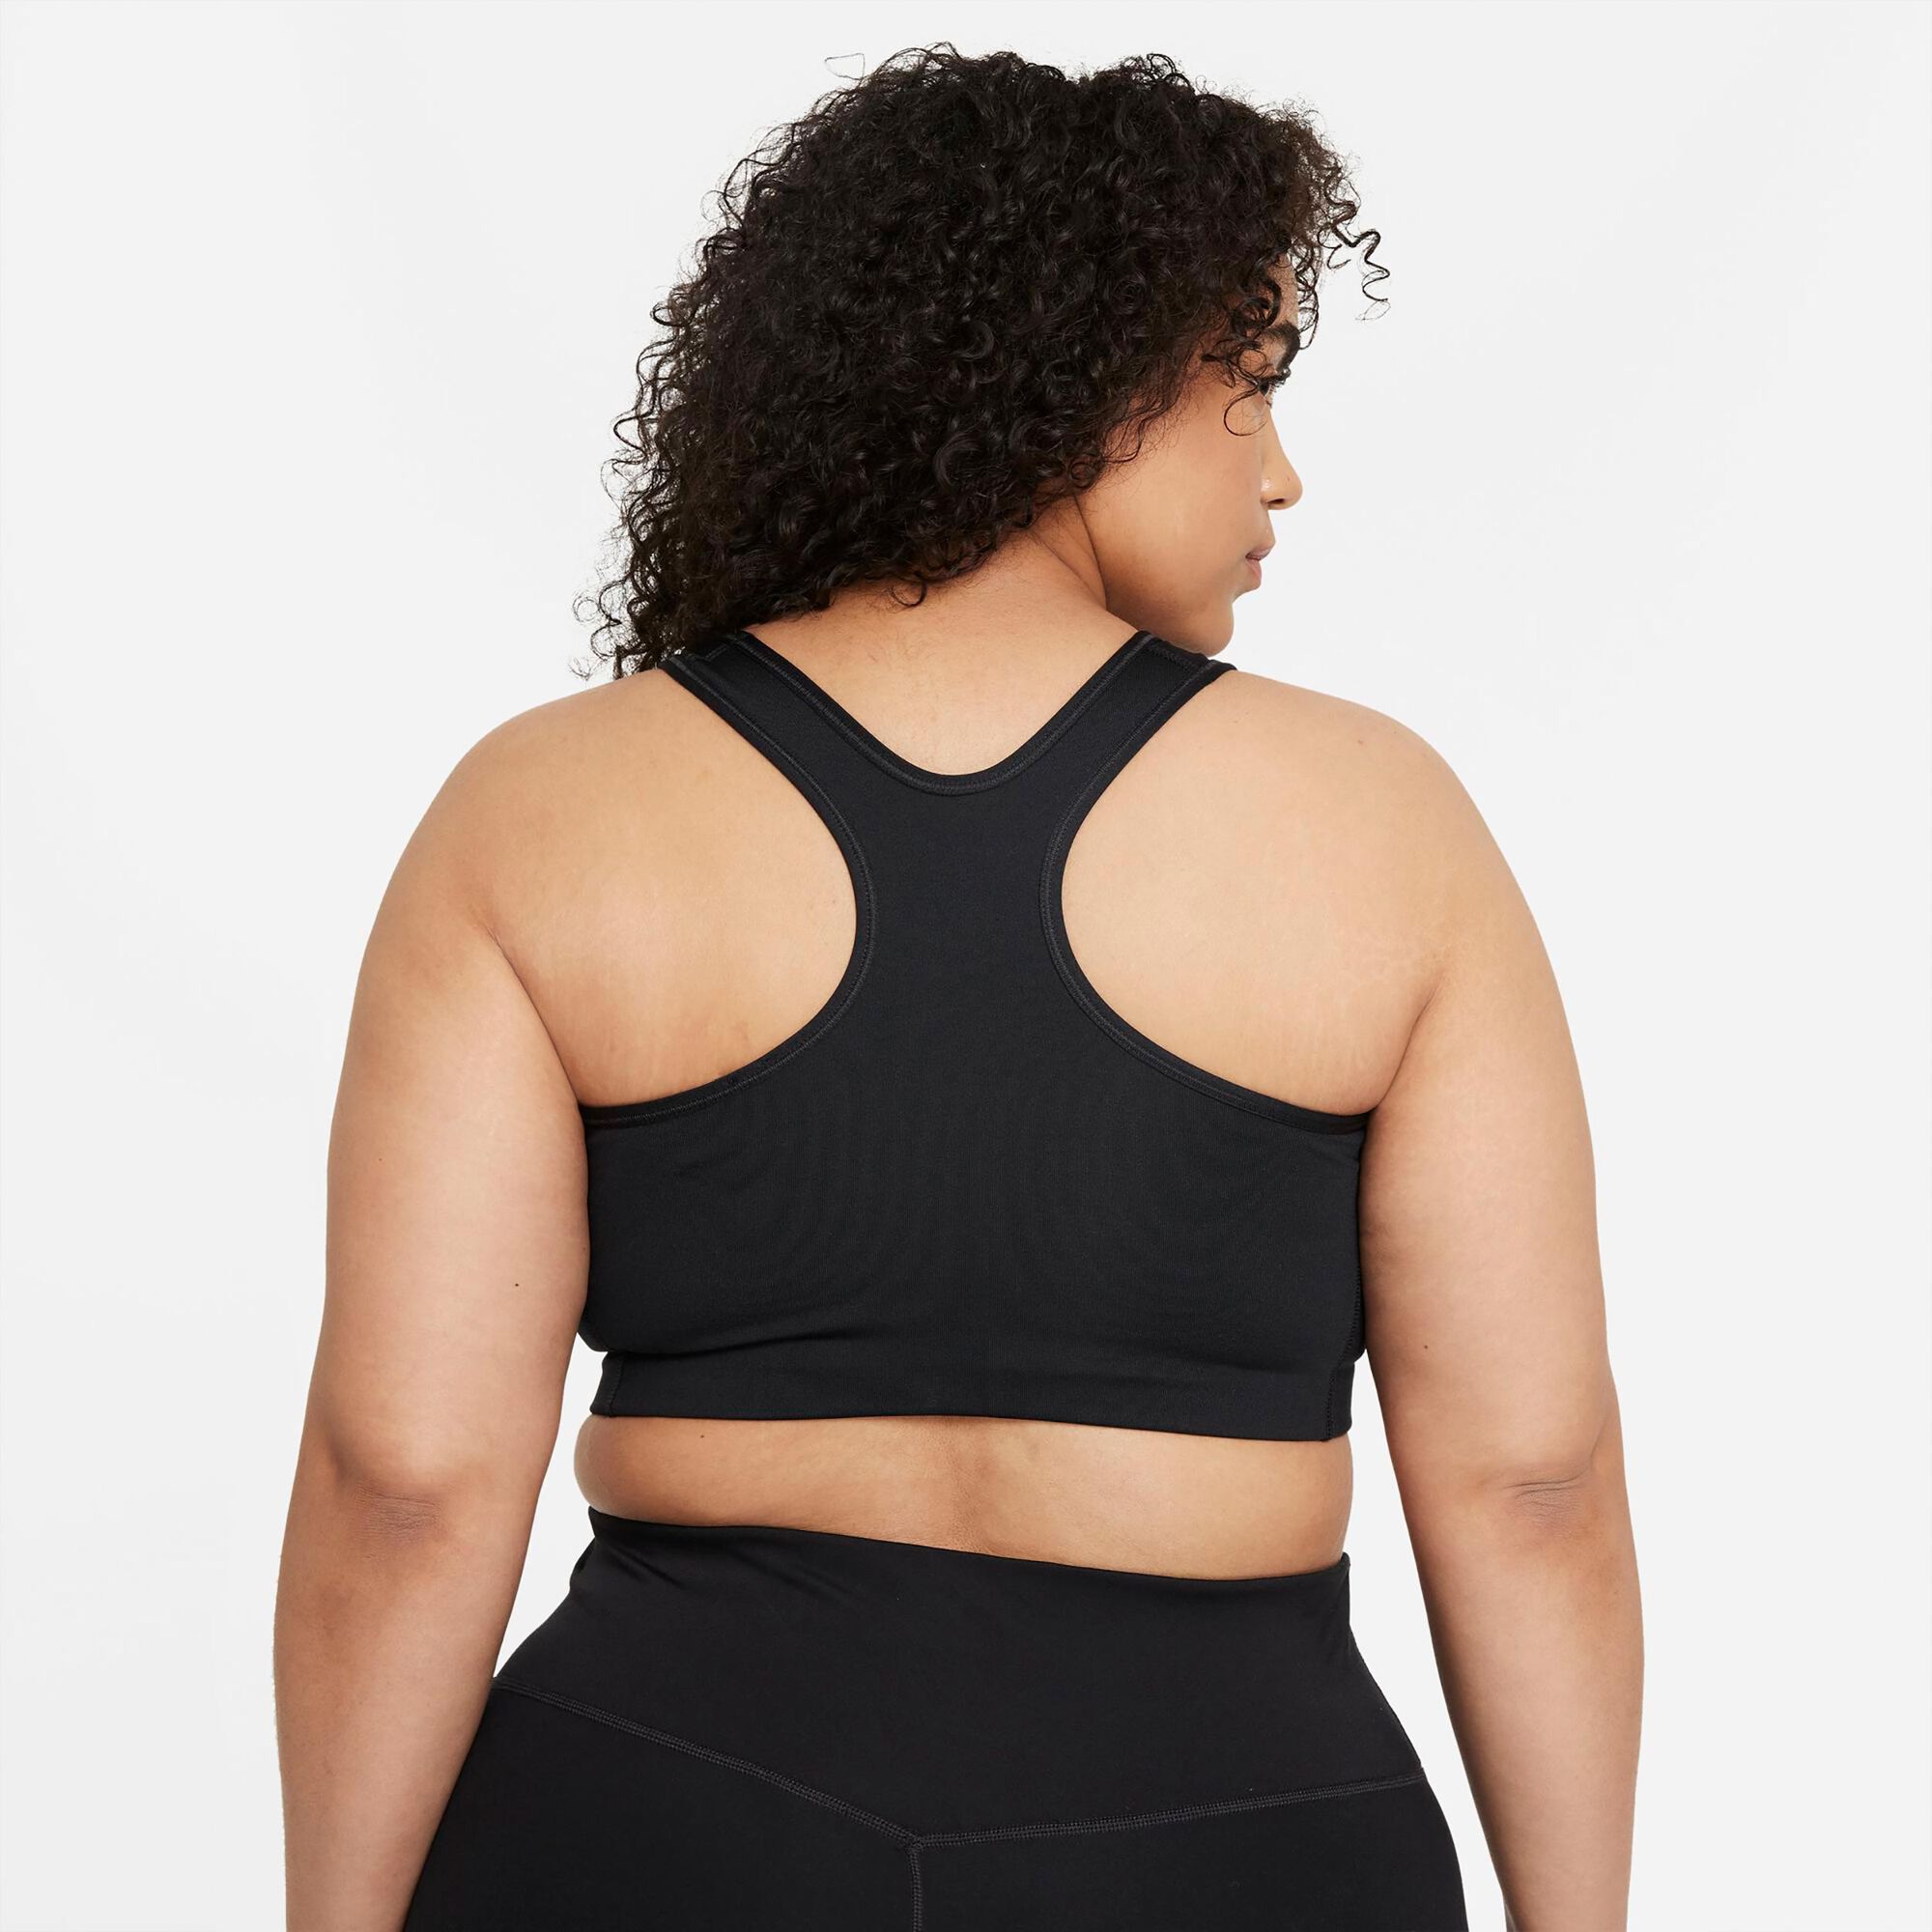 Buy Nike Swoosh Plus Size Sports Bras Women Black, White online